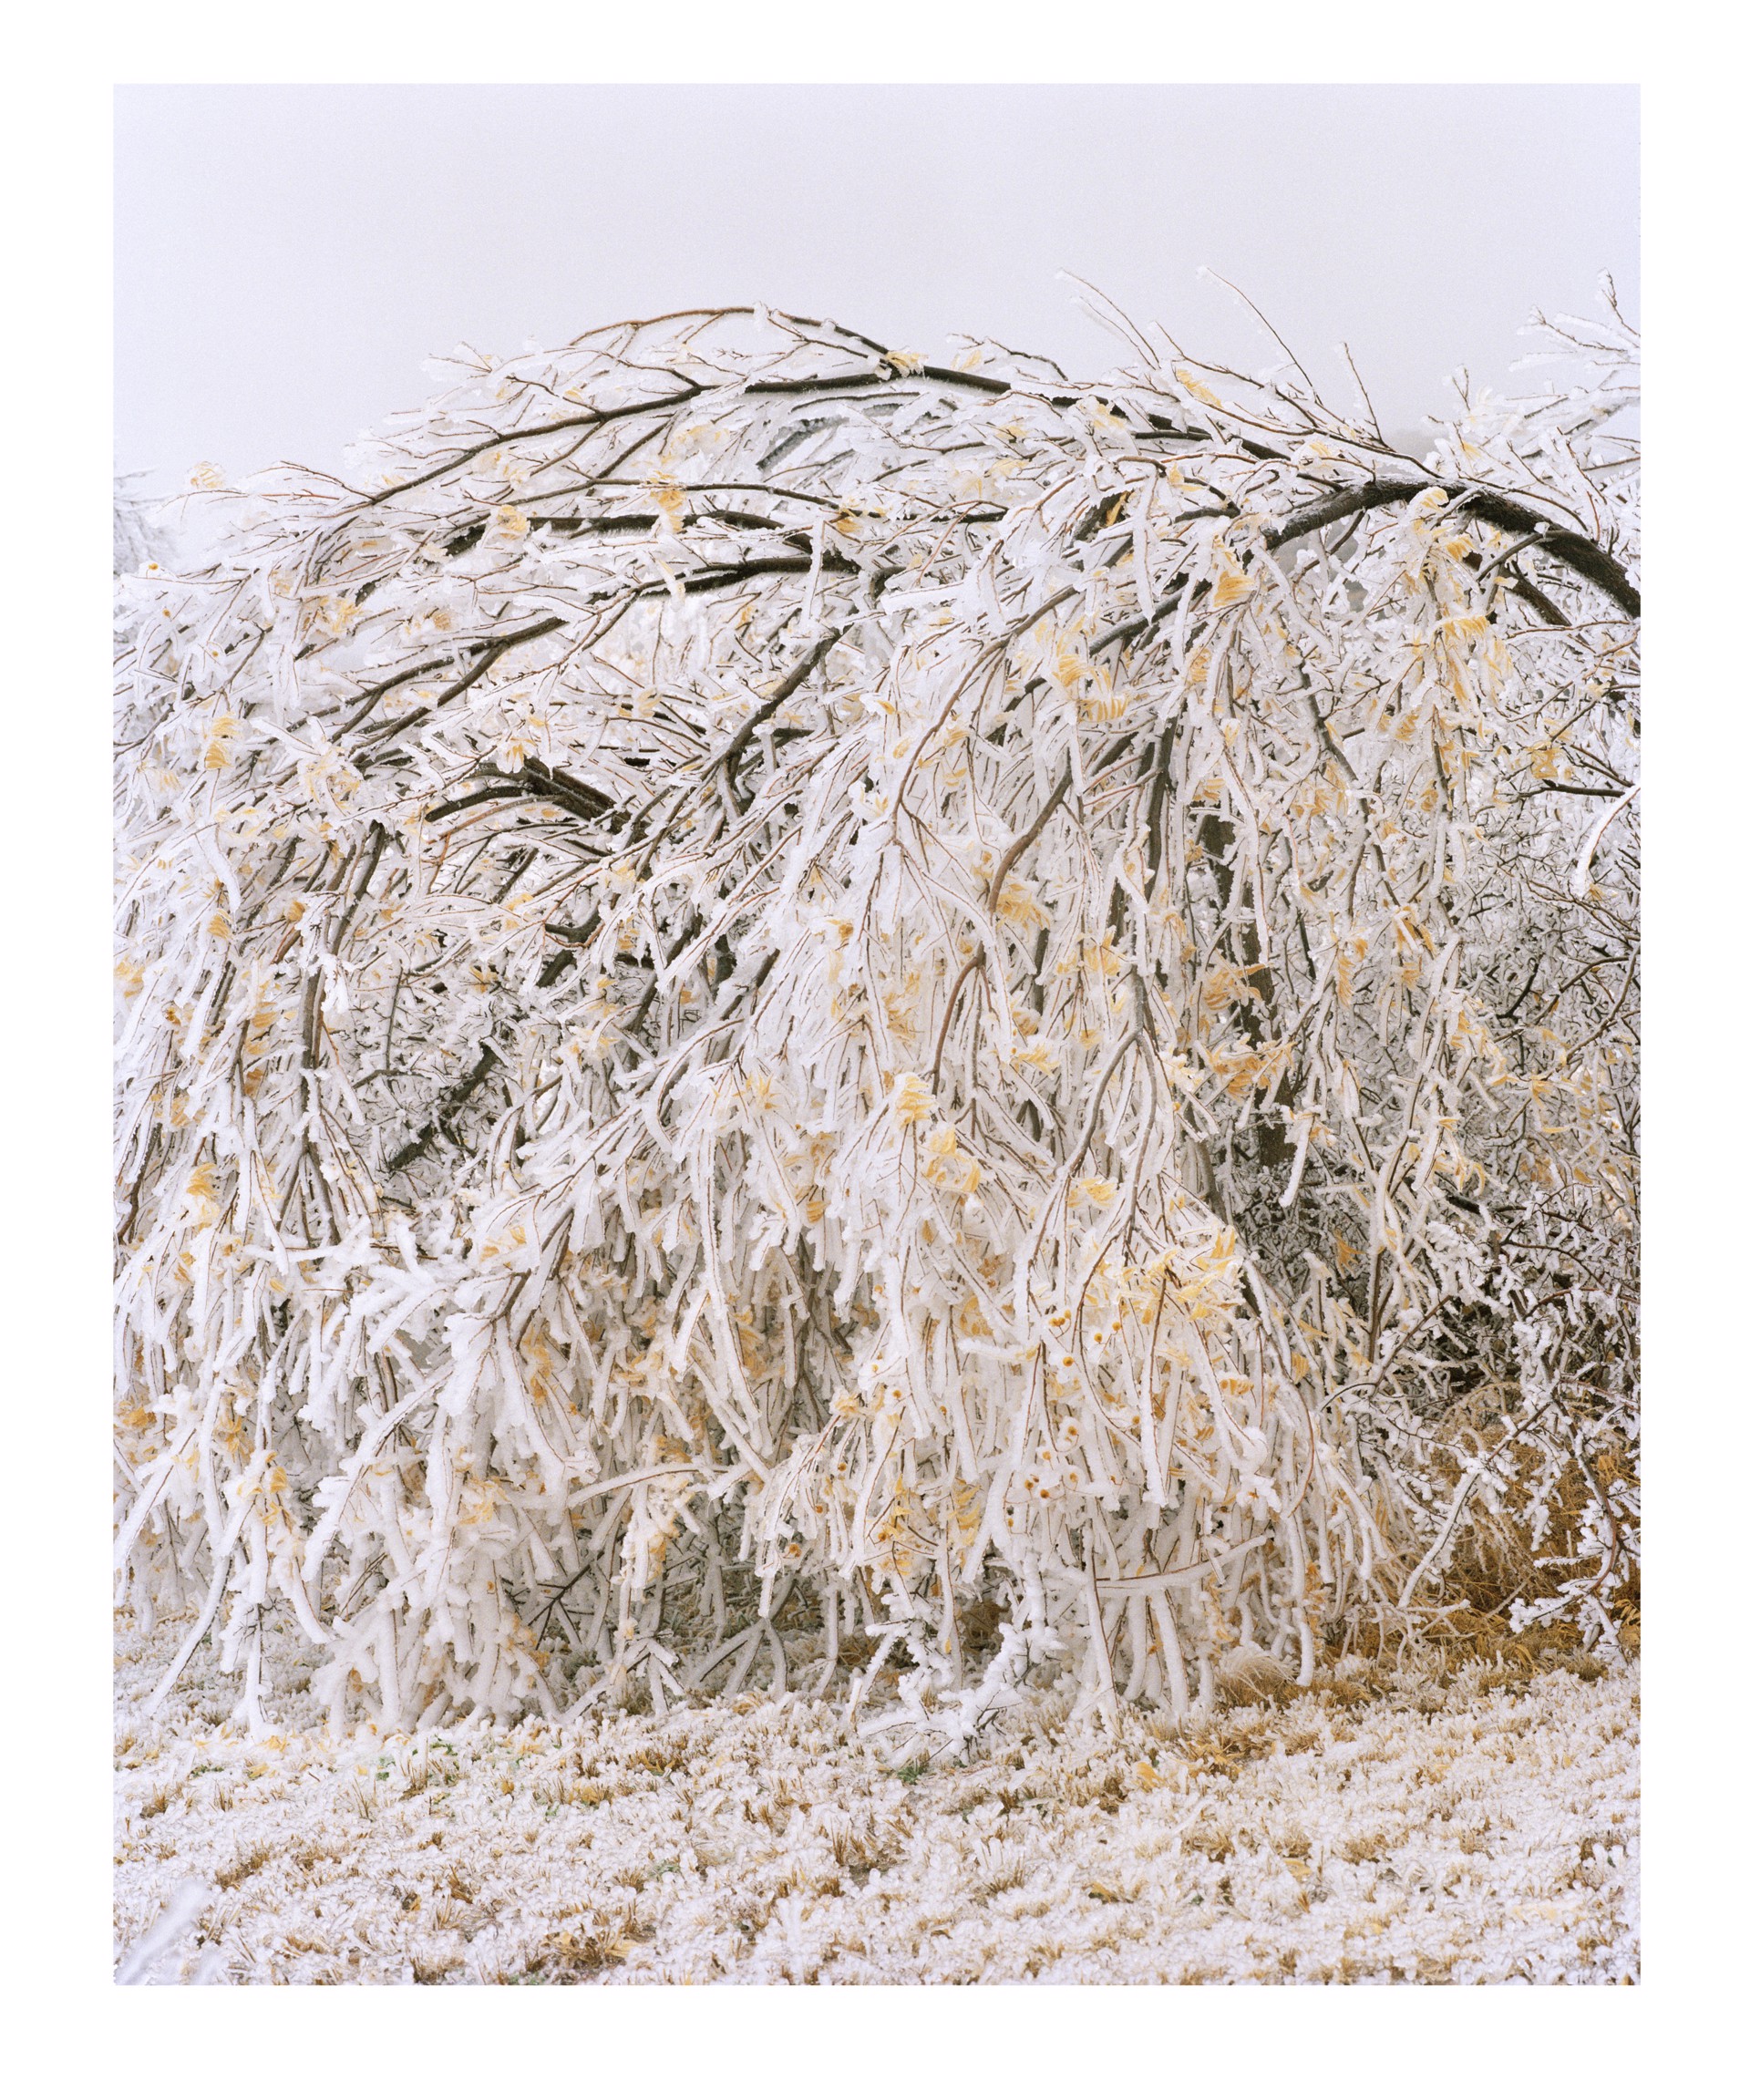 Frozen Tree, Texas by Ben Sklar